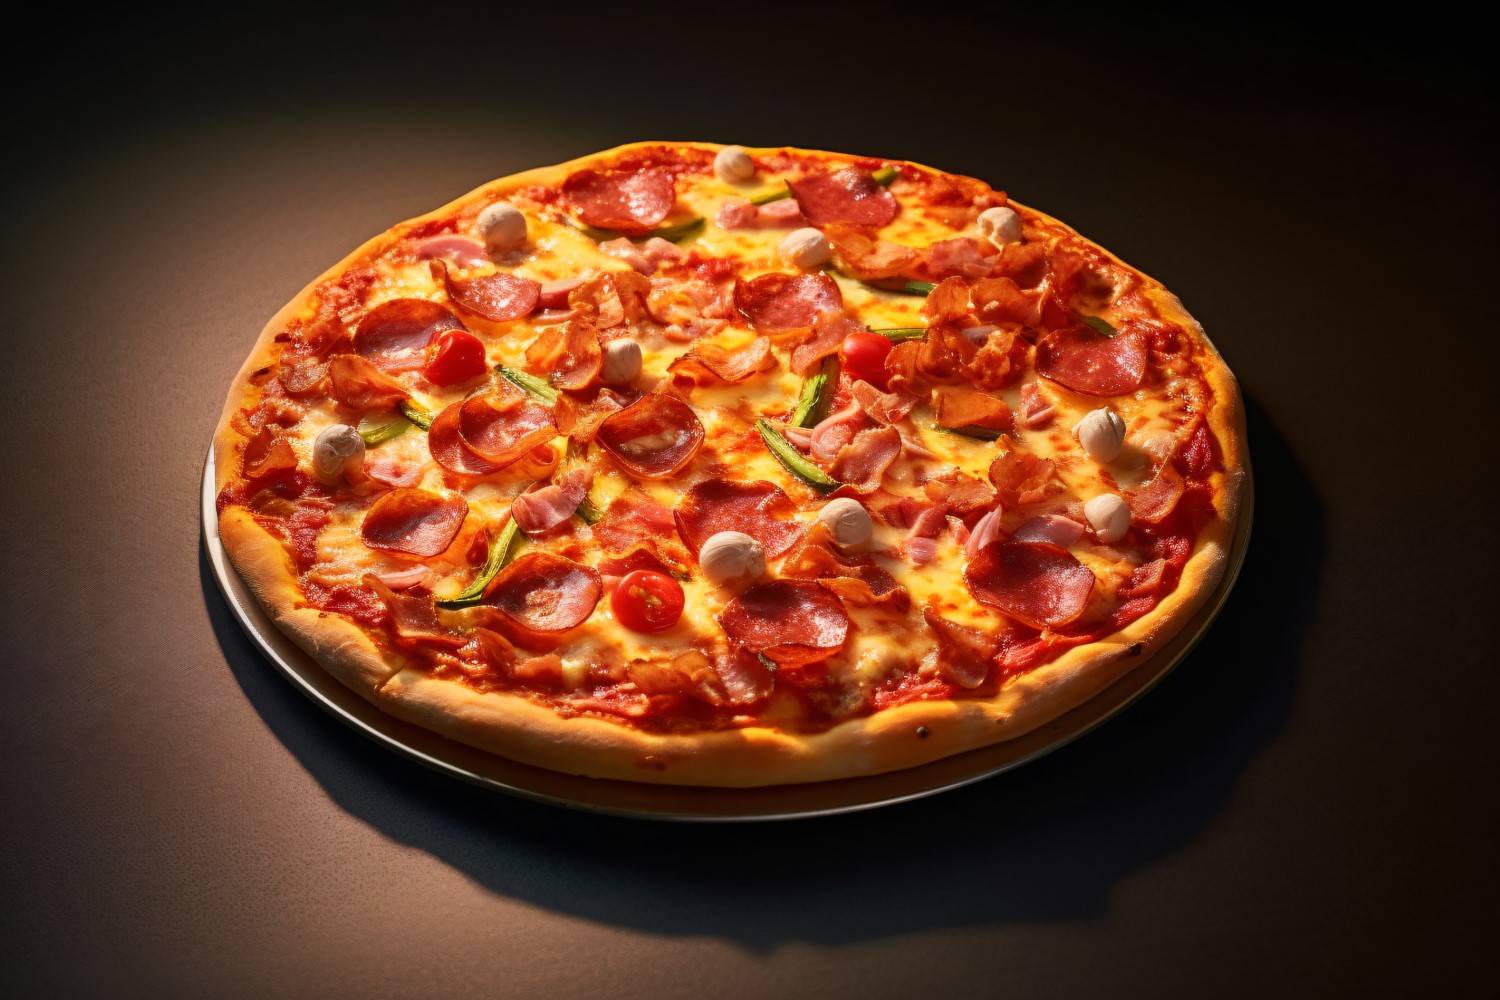 Concept Pizzerias With Delicious Taste Pepperoni Pizza 26